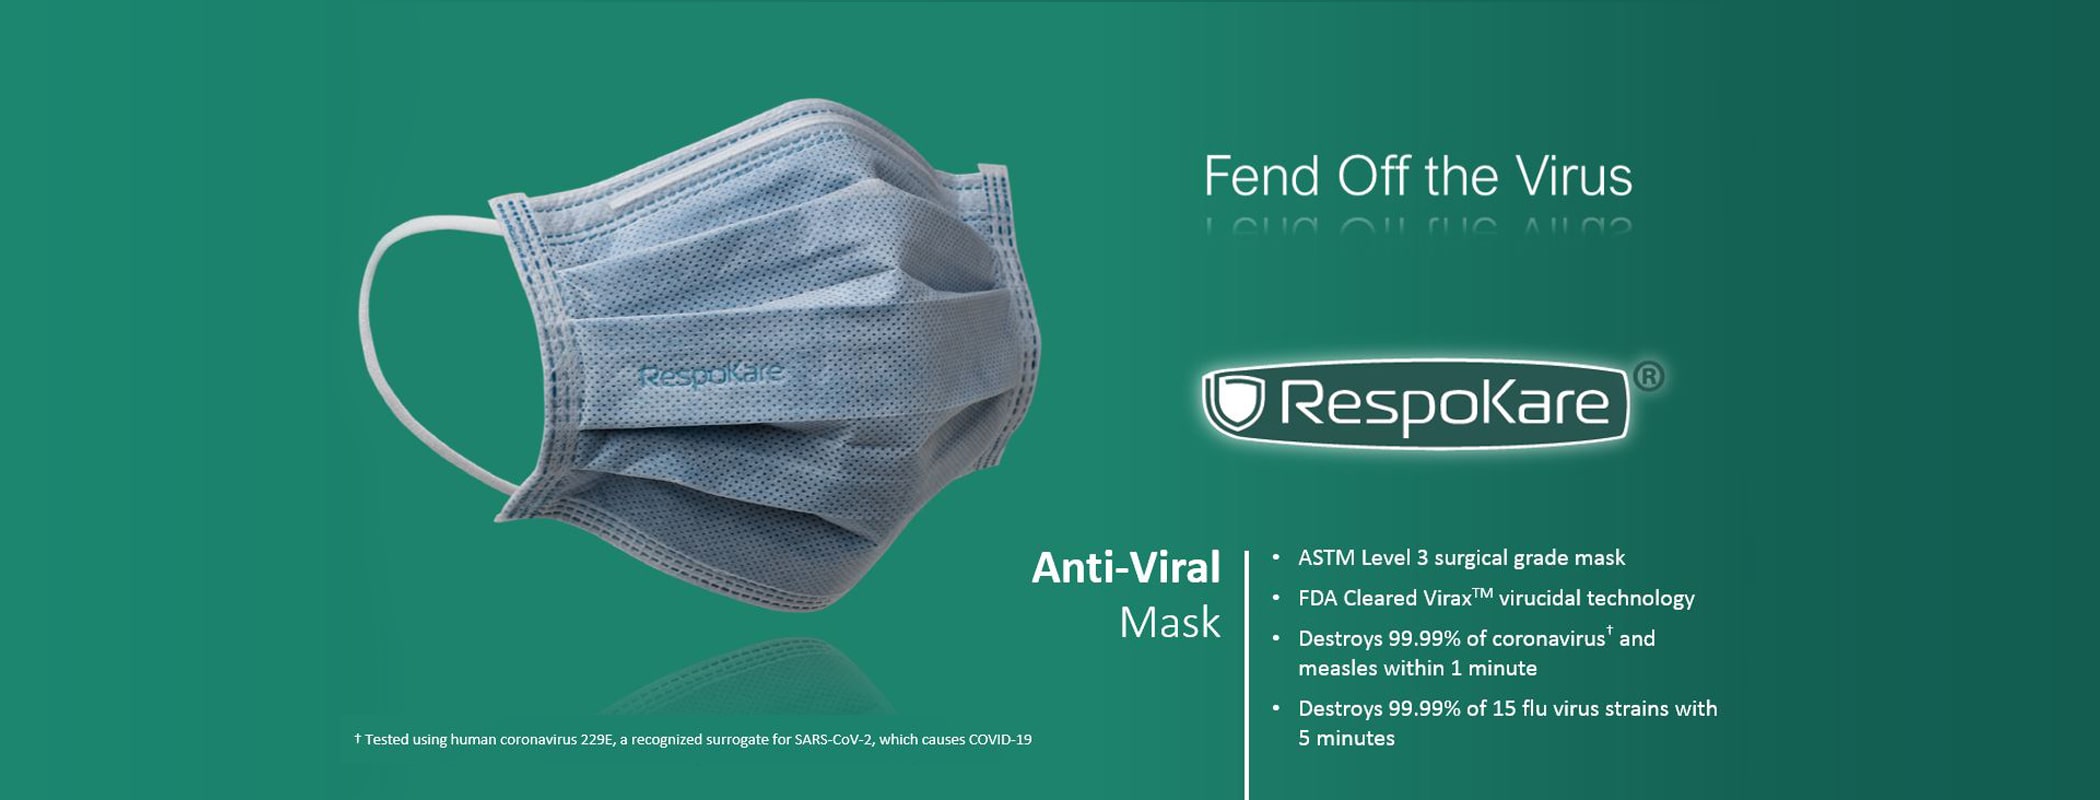 Respokare Anti-Viral Mask